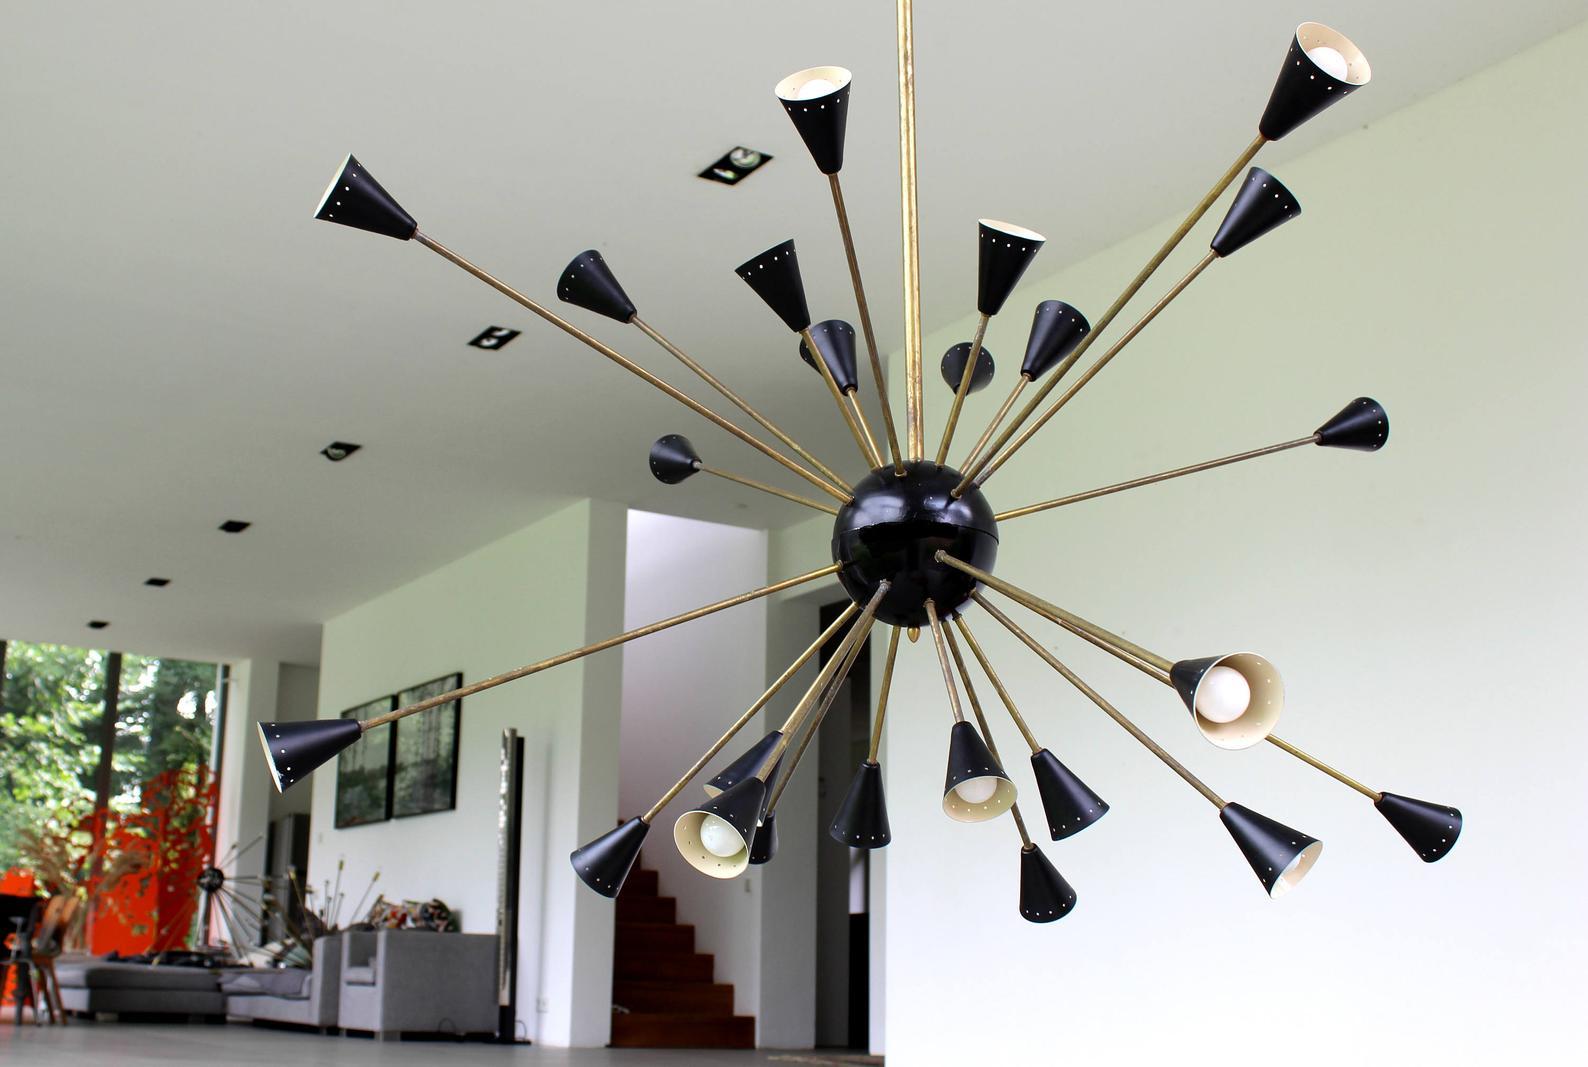 Oversized 24 lights starburst sputnik chandelier Milano 1950s
Brass and fine enameled shades in black and pearl white

Measures: Diameter 55